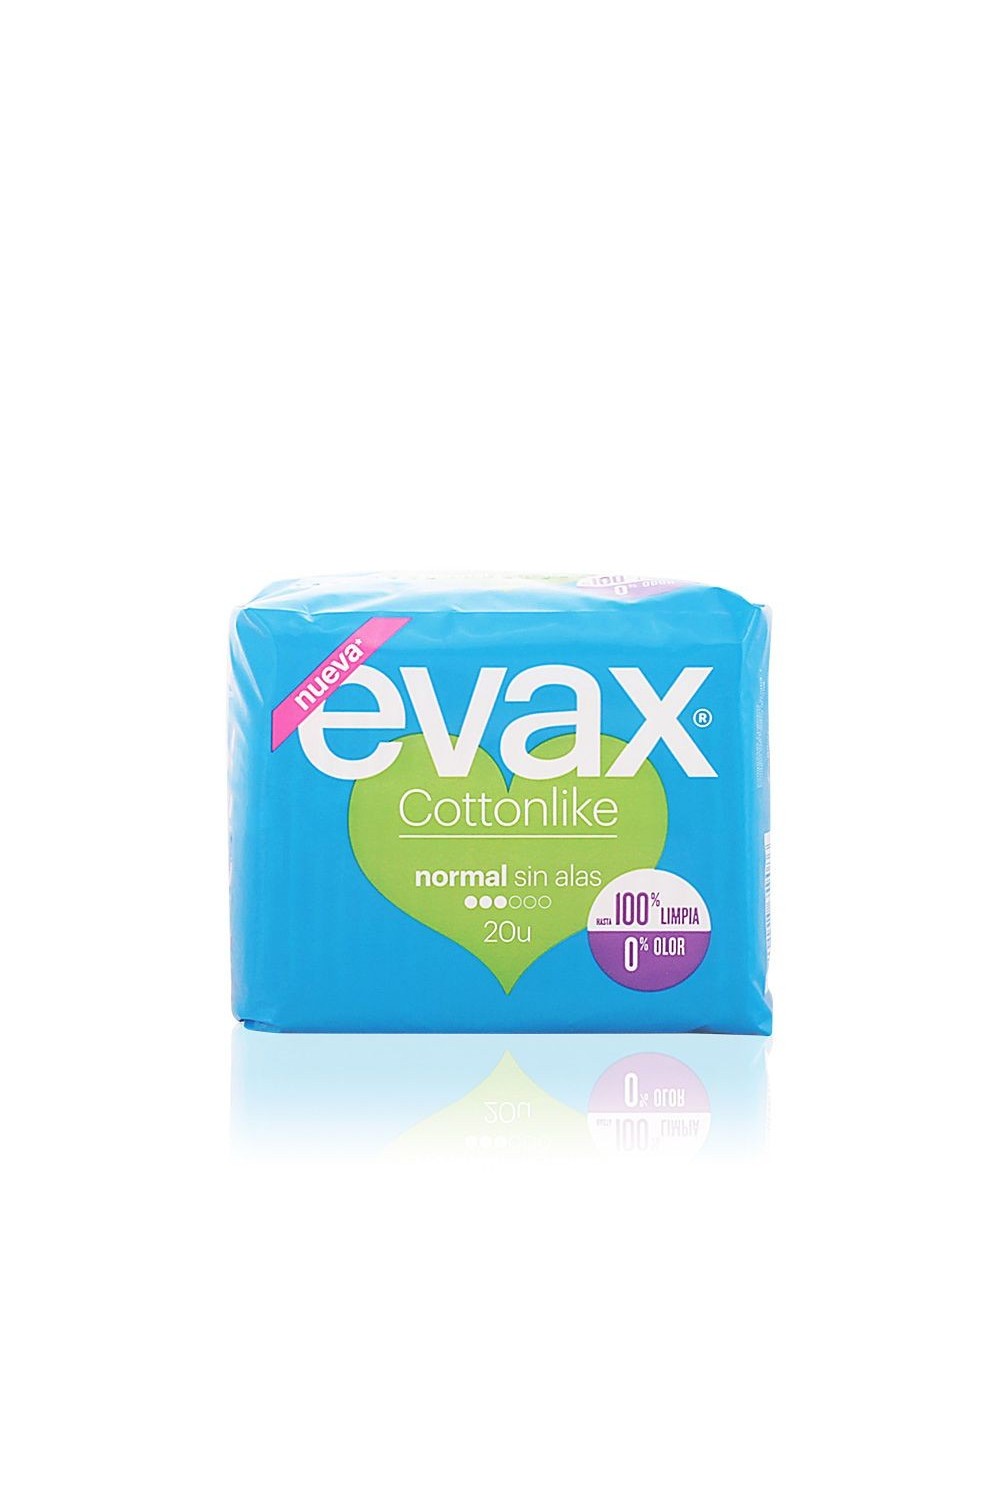 Evax Cottonlike Normal Sanitary Towels 20 Units